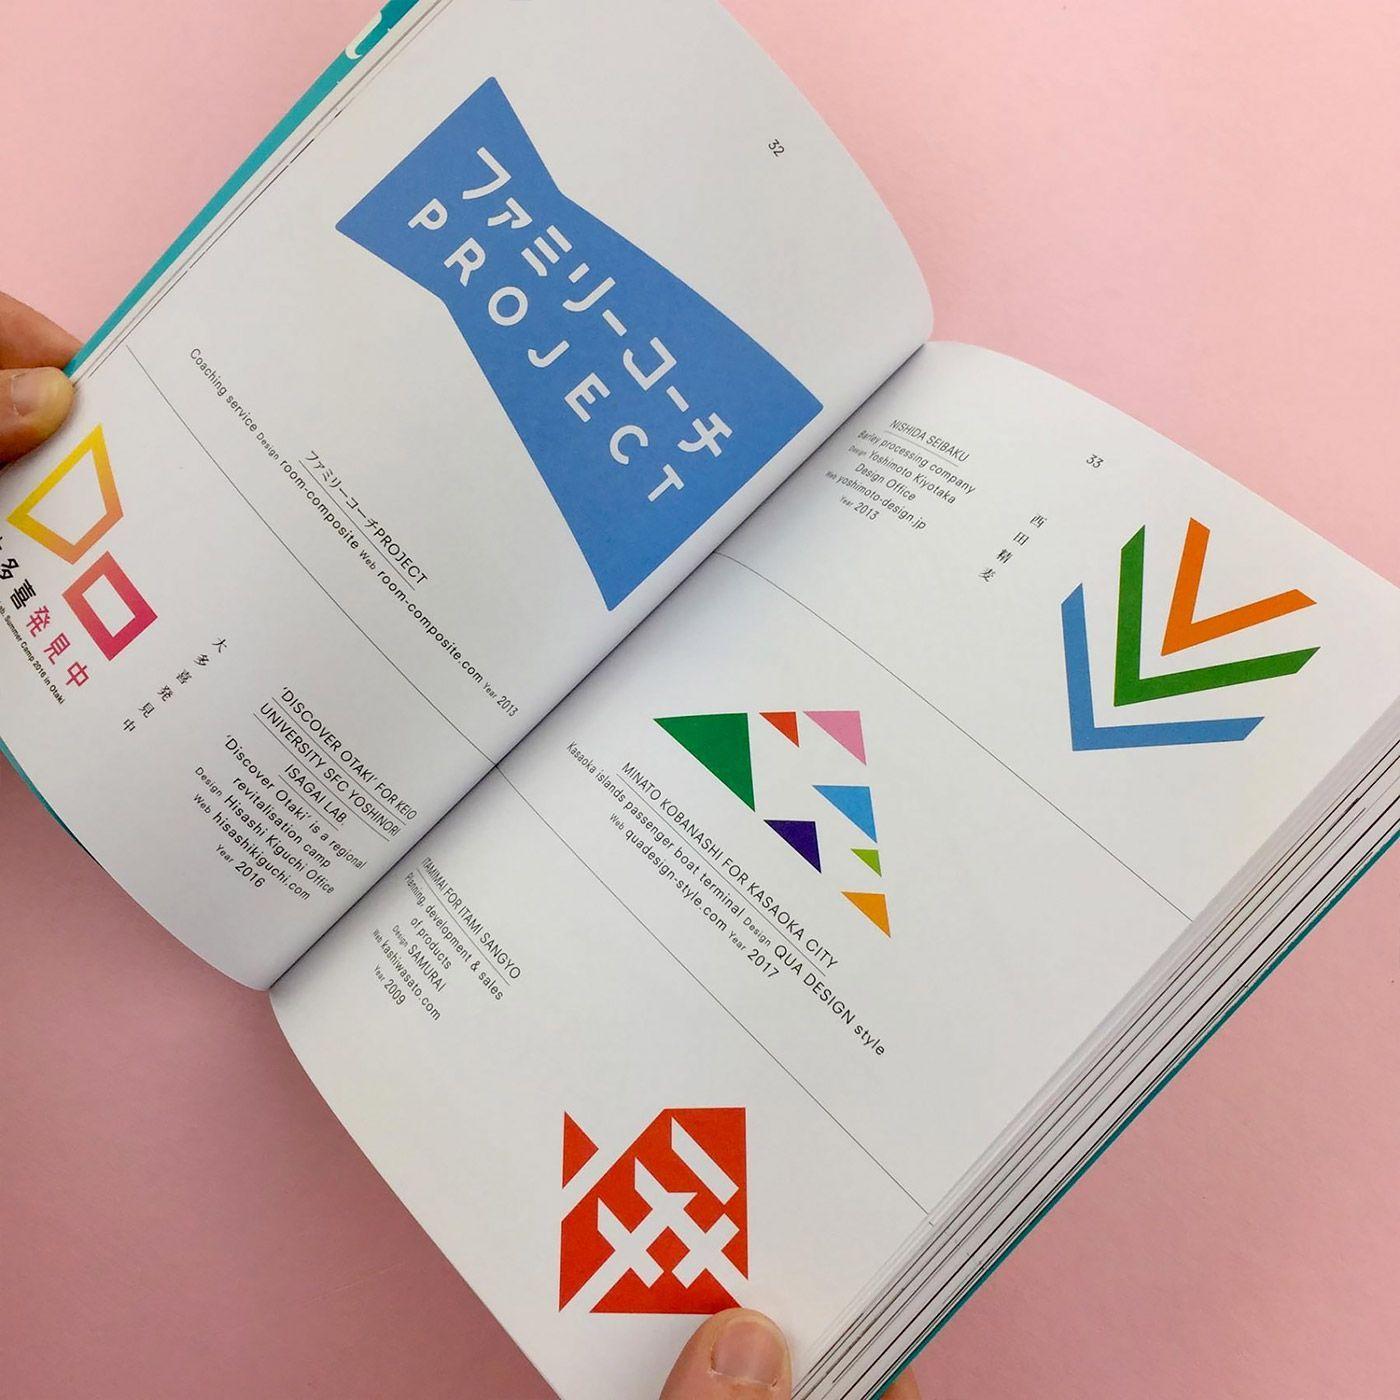 Japanese W Logo - Logos from Japan by Counter-Print | Editorial Design | Logos, Design ...